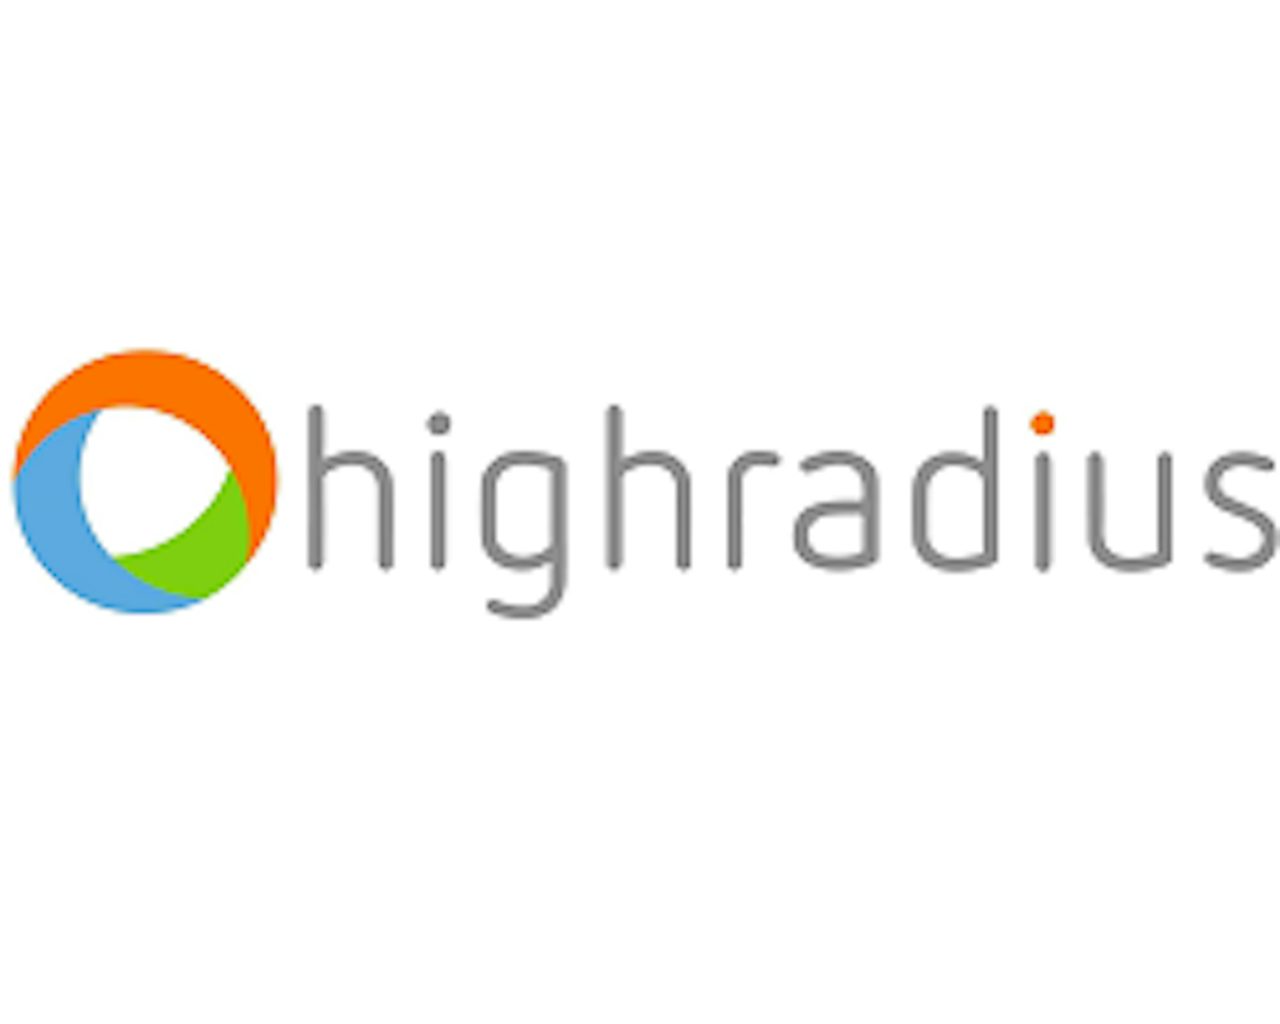 Highradius logo